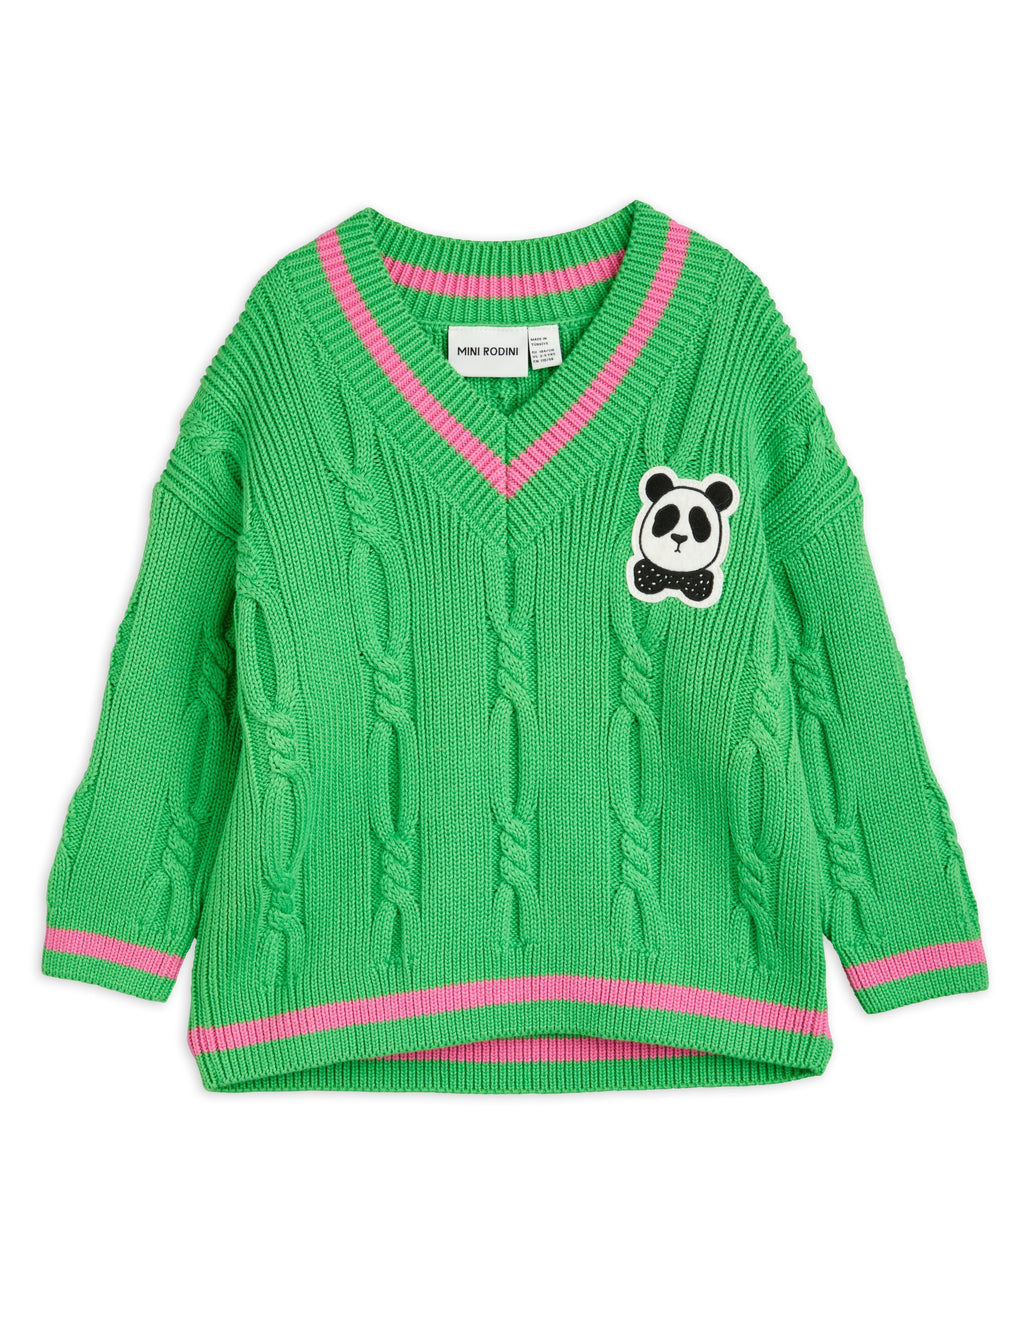 Mini Rodini Panda Knitted V-Neck Sweater - Green